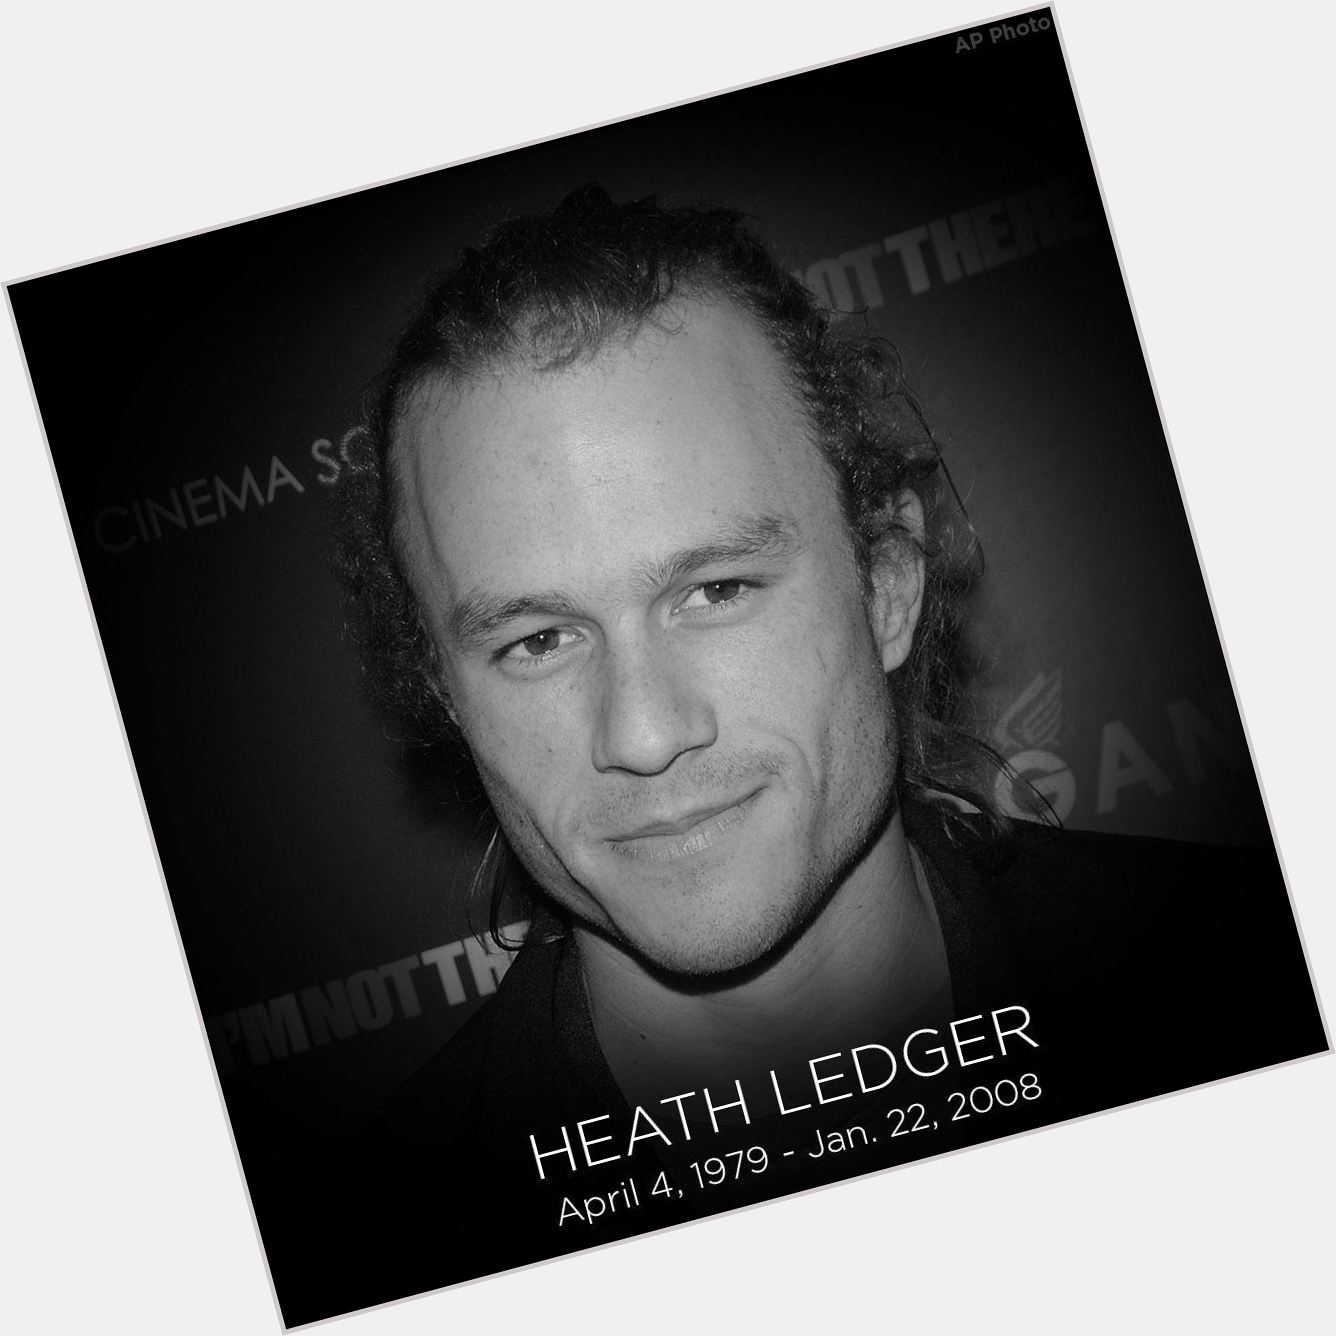 One of the actor who broke typecasting. Happy birthday Heath Ledger!!! 